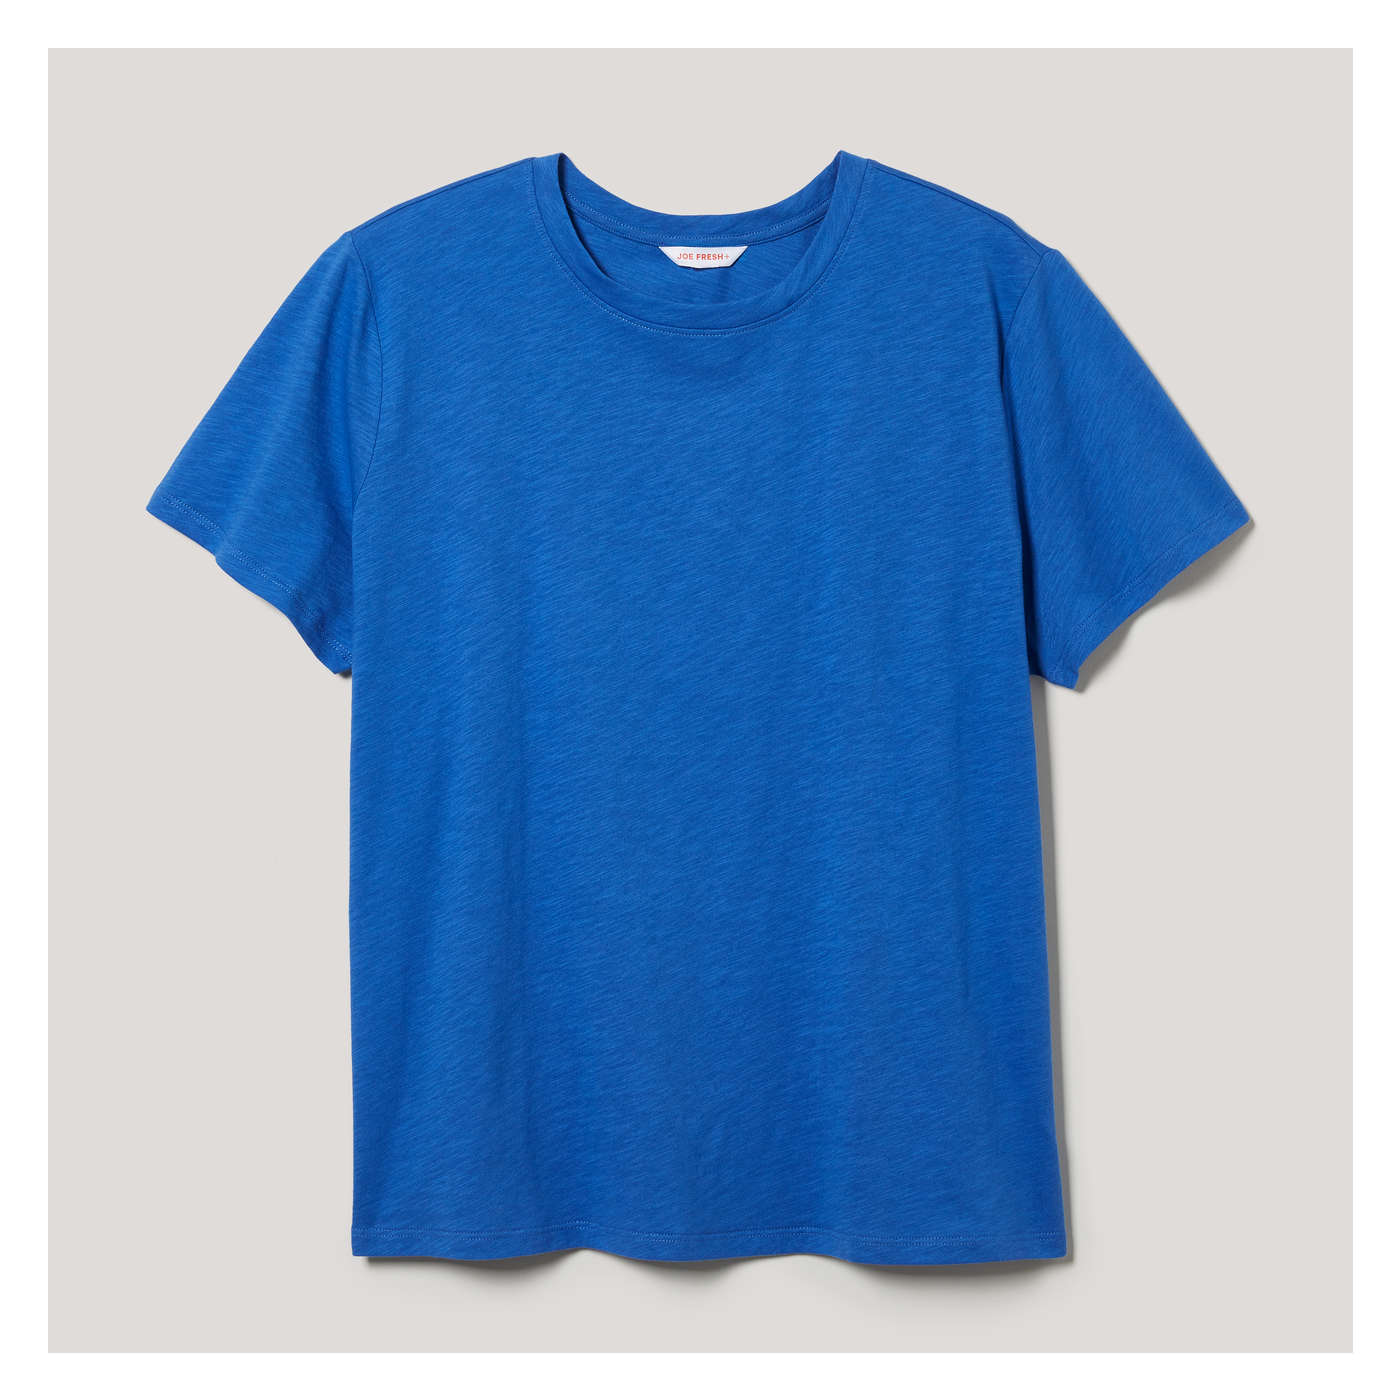 T-Shirt in Royal Blue from Joe Fresh